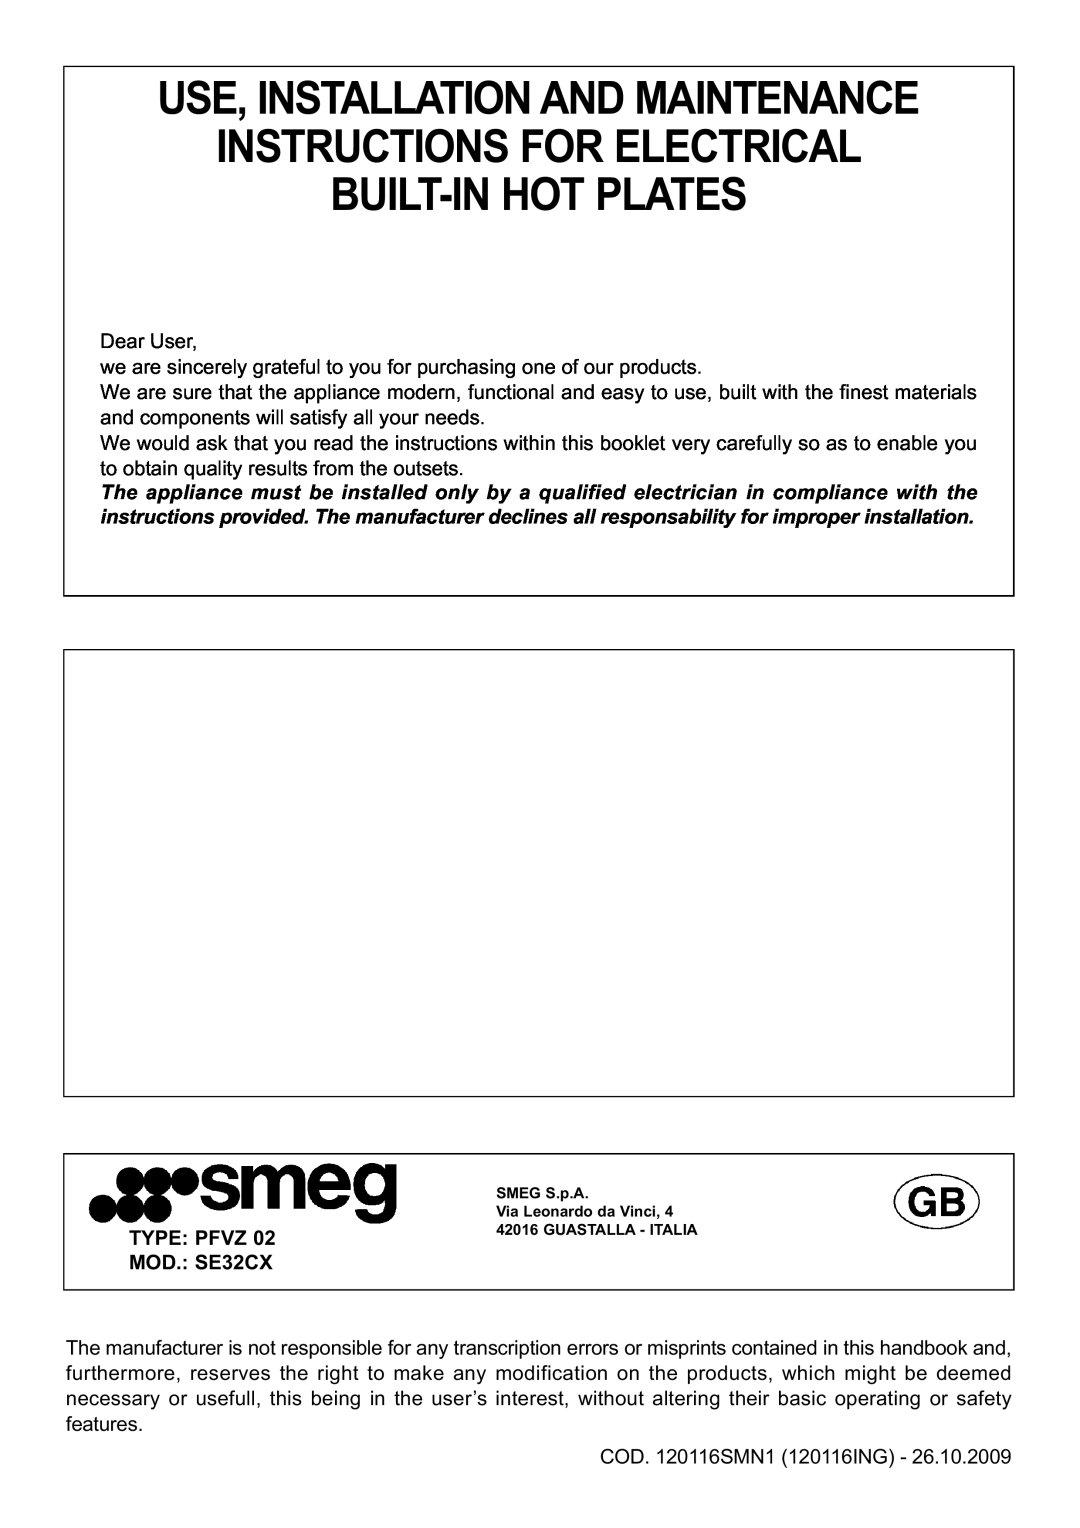 Smeg SE32CX manual Use,Installationandmaintenance Instructionsforelectrical, Built-Inhotplates 